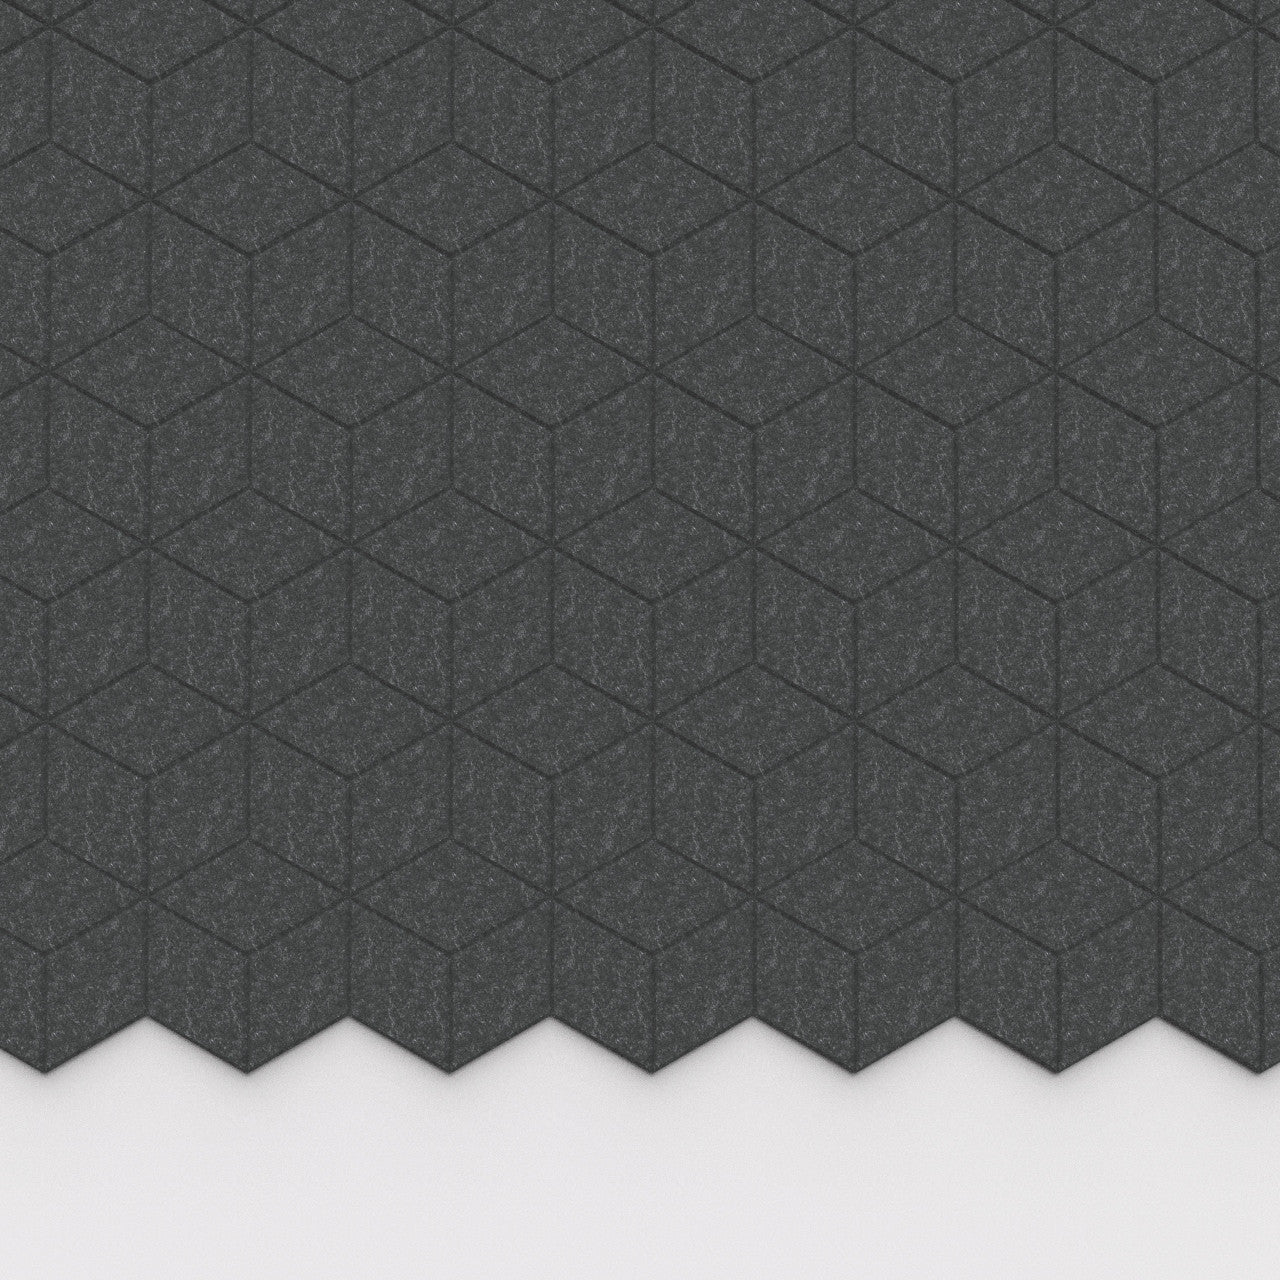 100% Recycled PET Felt Hexagon Diamond Small Acoustic Tile Dark Grey | Plastock